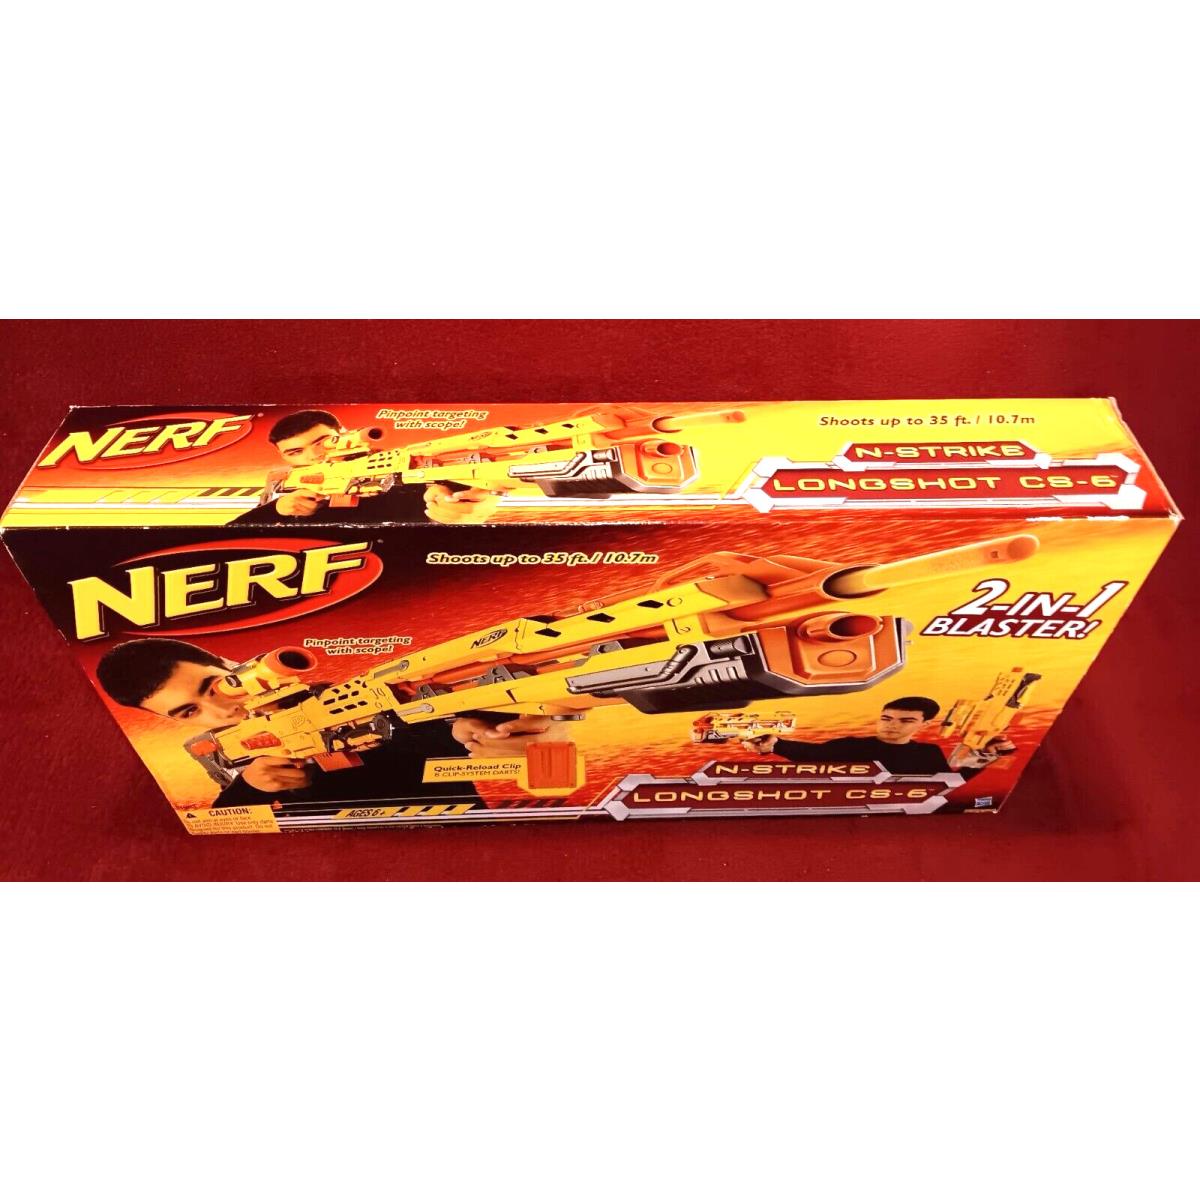 Nerf N-strike Longshot CS-6 61983 2009 Hasbro 2 IN 1 Blaster Read